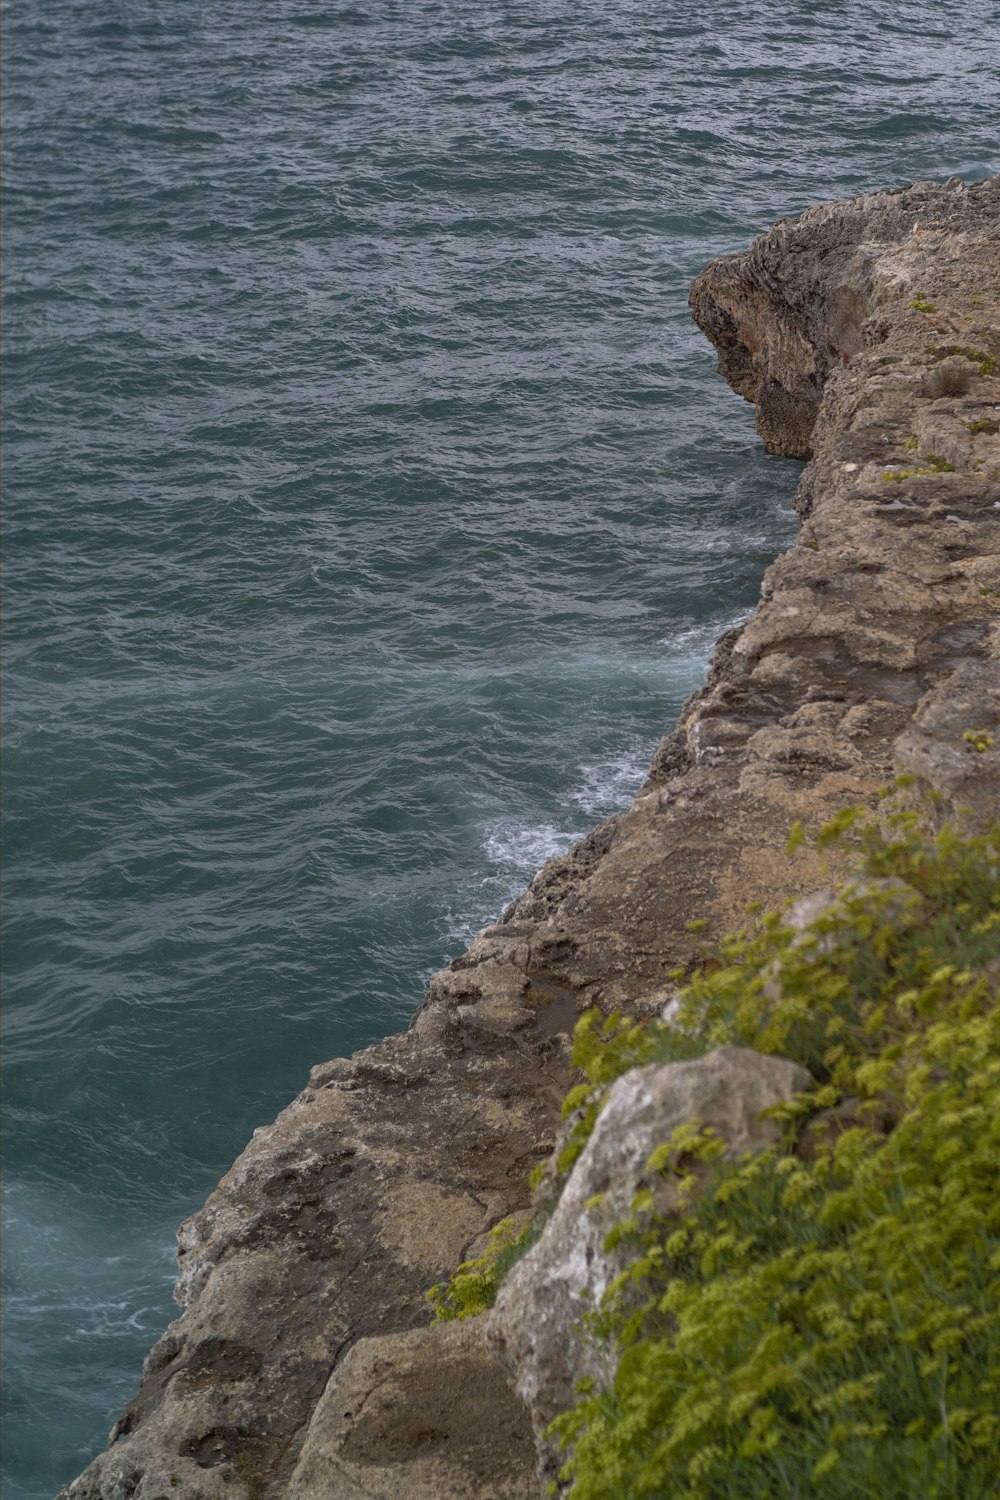 a bird sitting on the edge of a cliff near the ocean